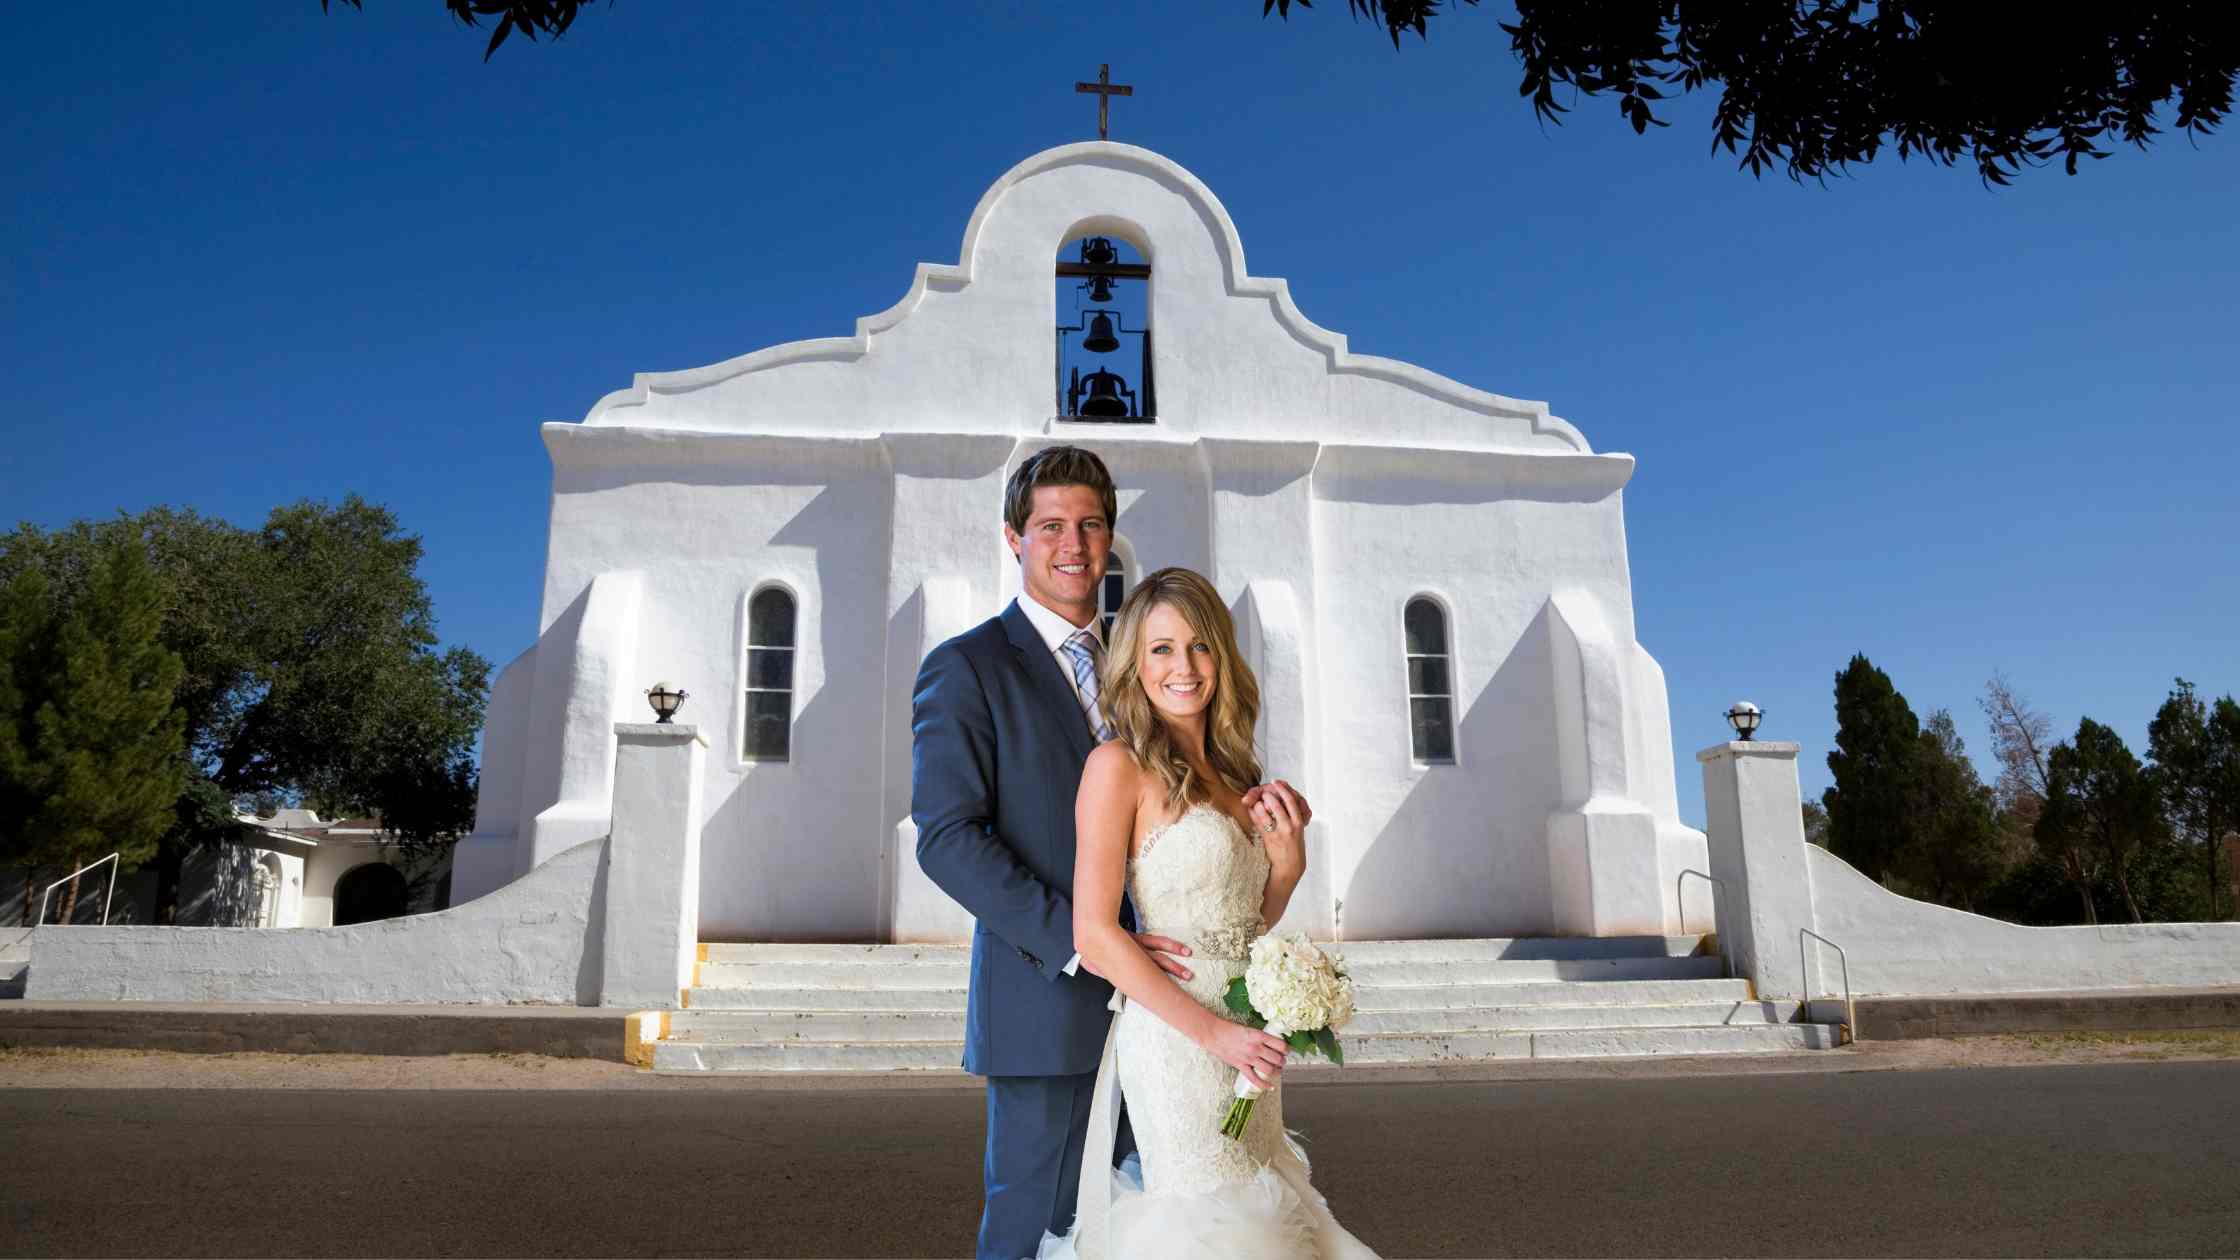 El Paso Wedding Planning, El Paso Wedding Photographers, Your Complete Wedding Planning Resource